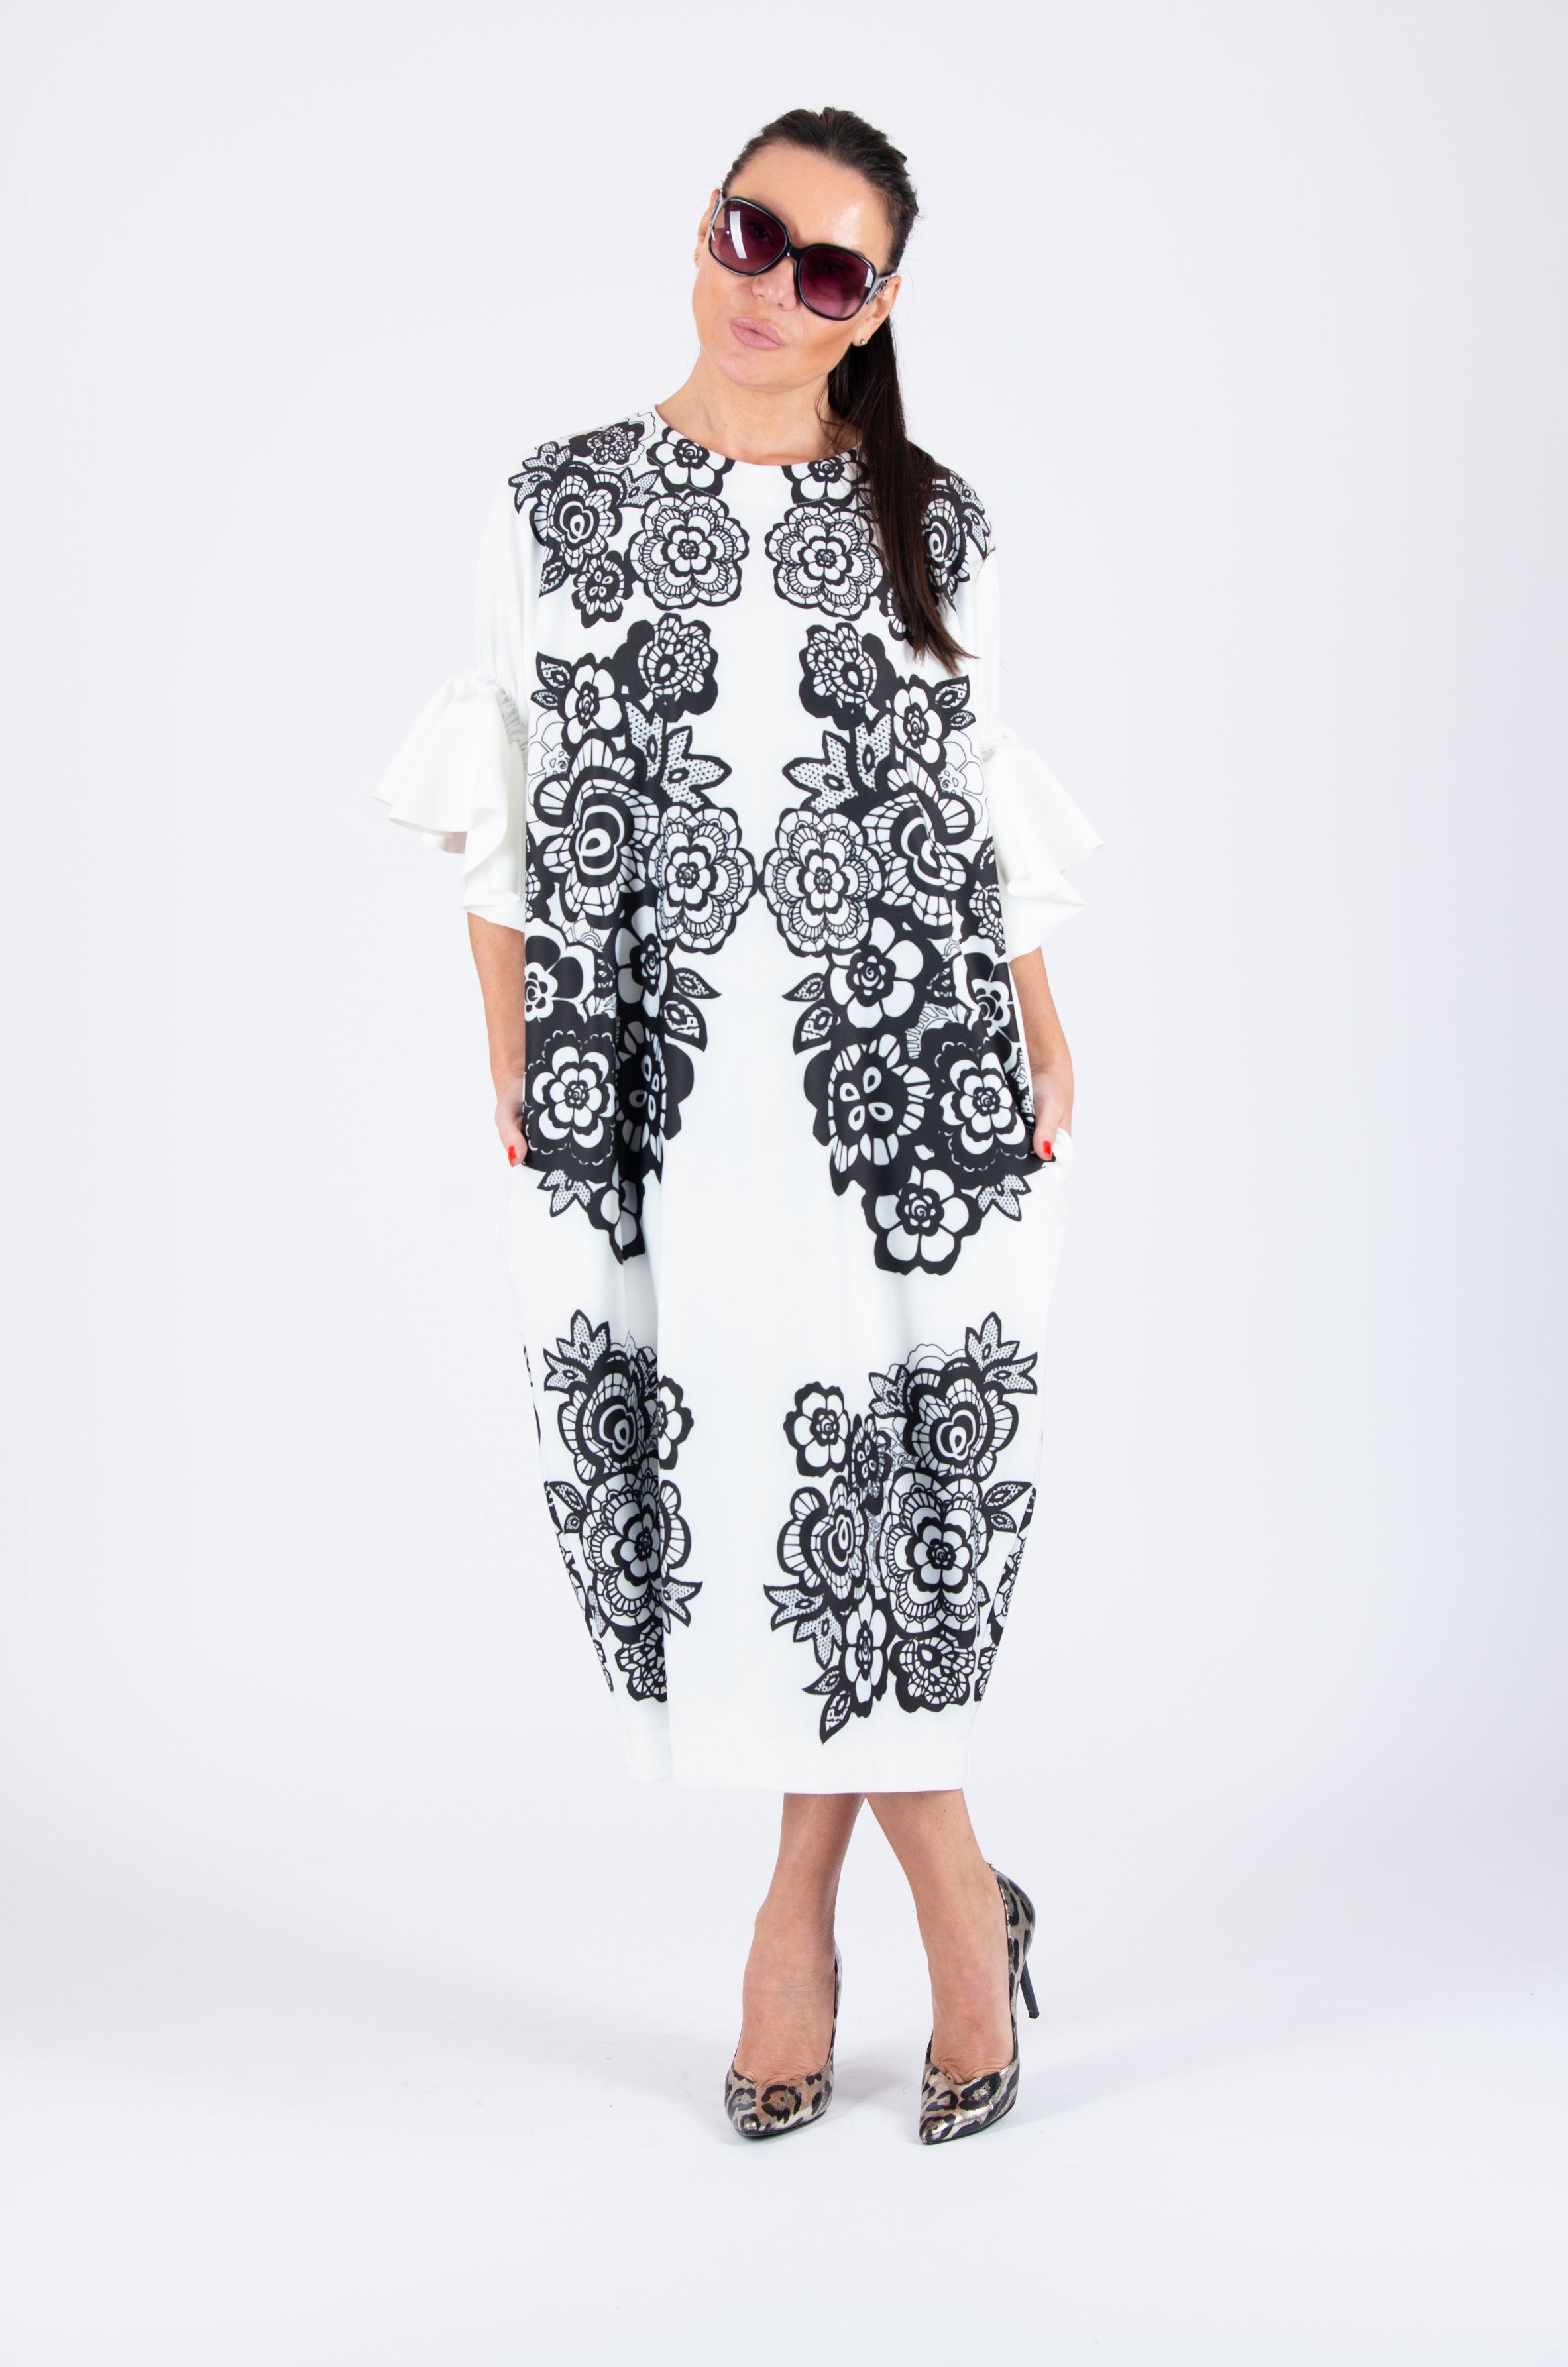 Black and White Winter Neoprene Dress by EUG Fashion